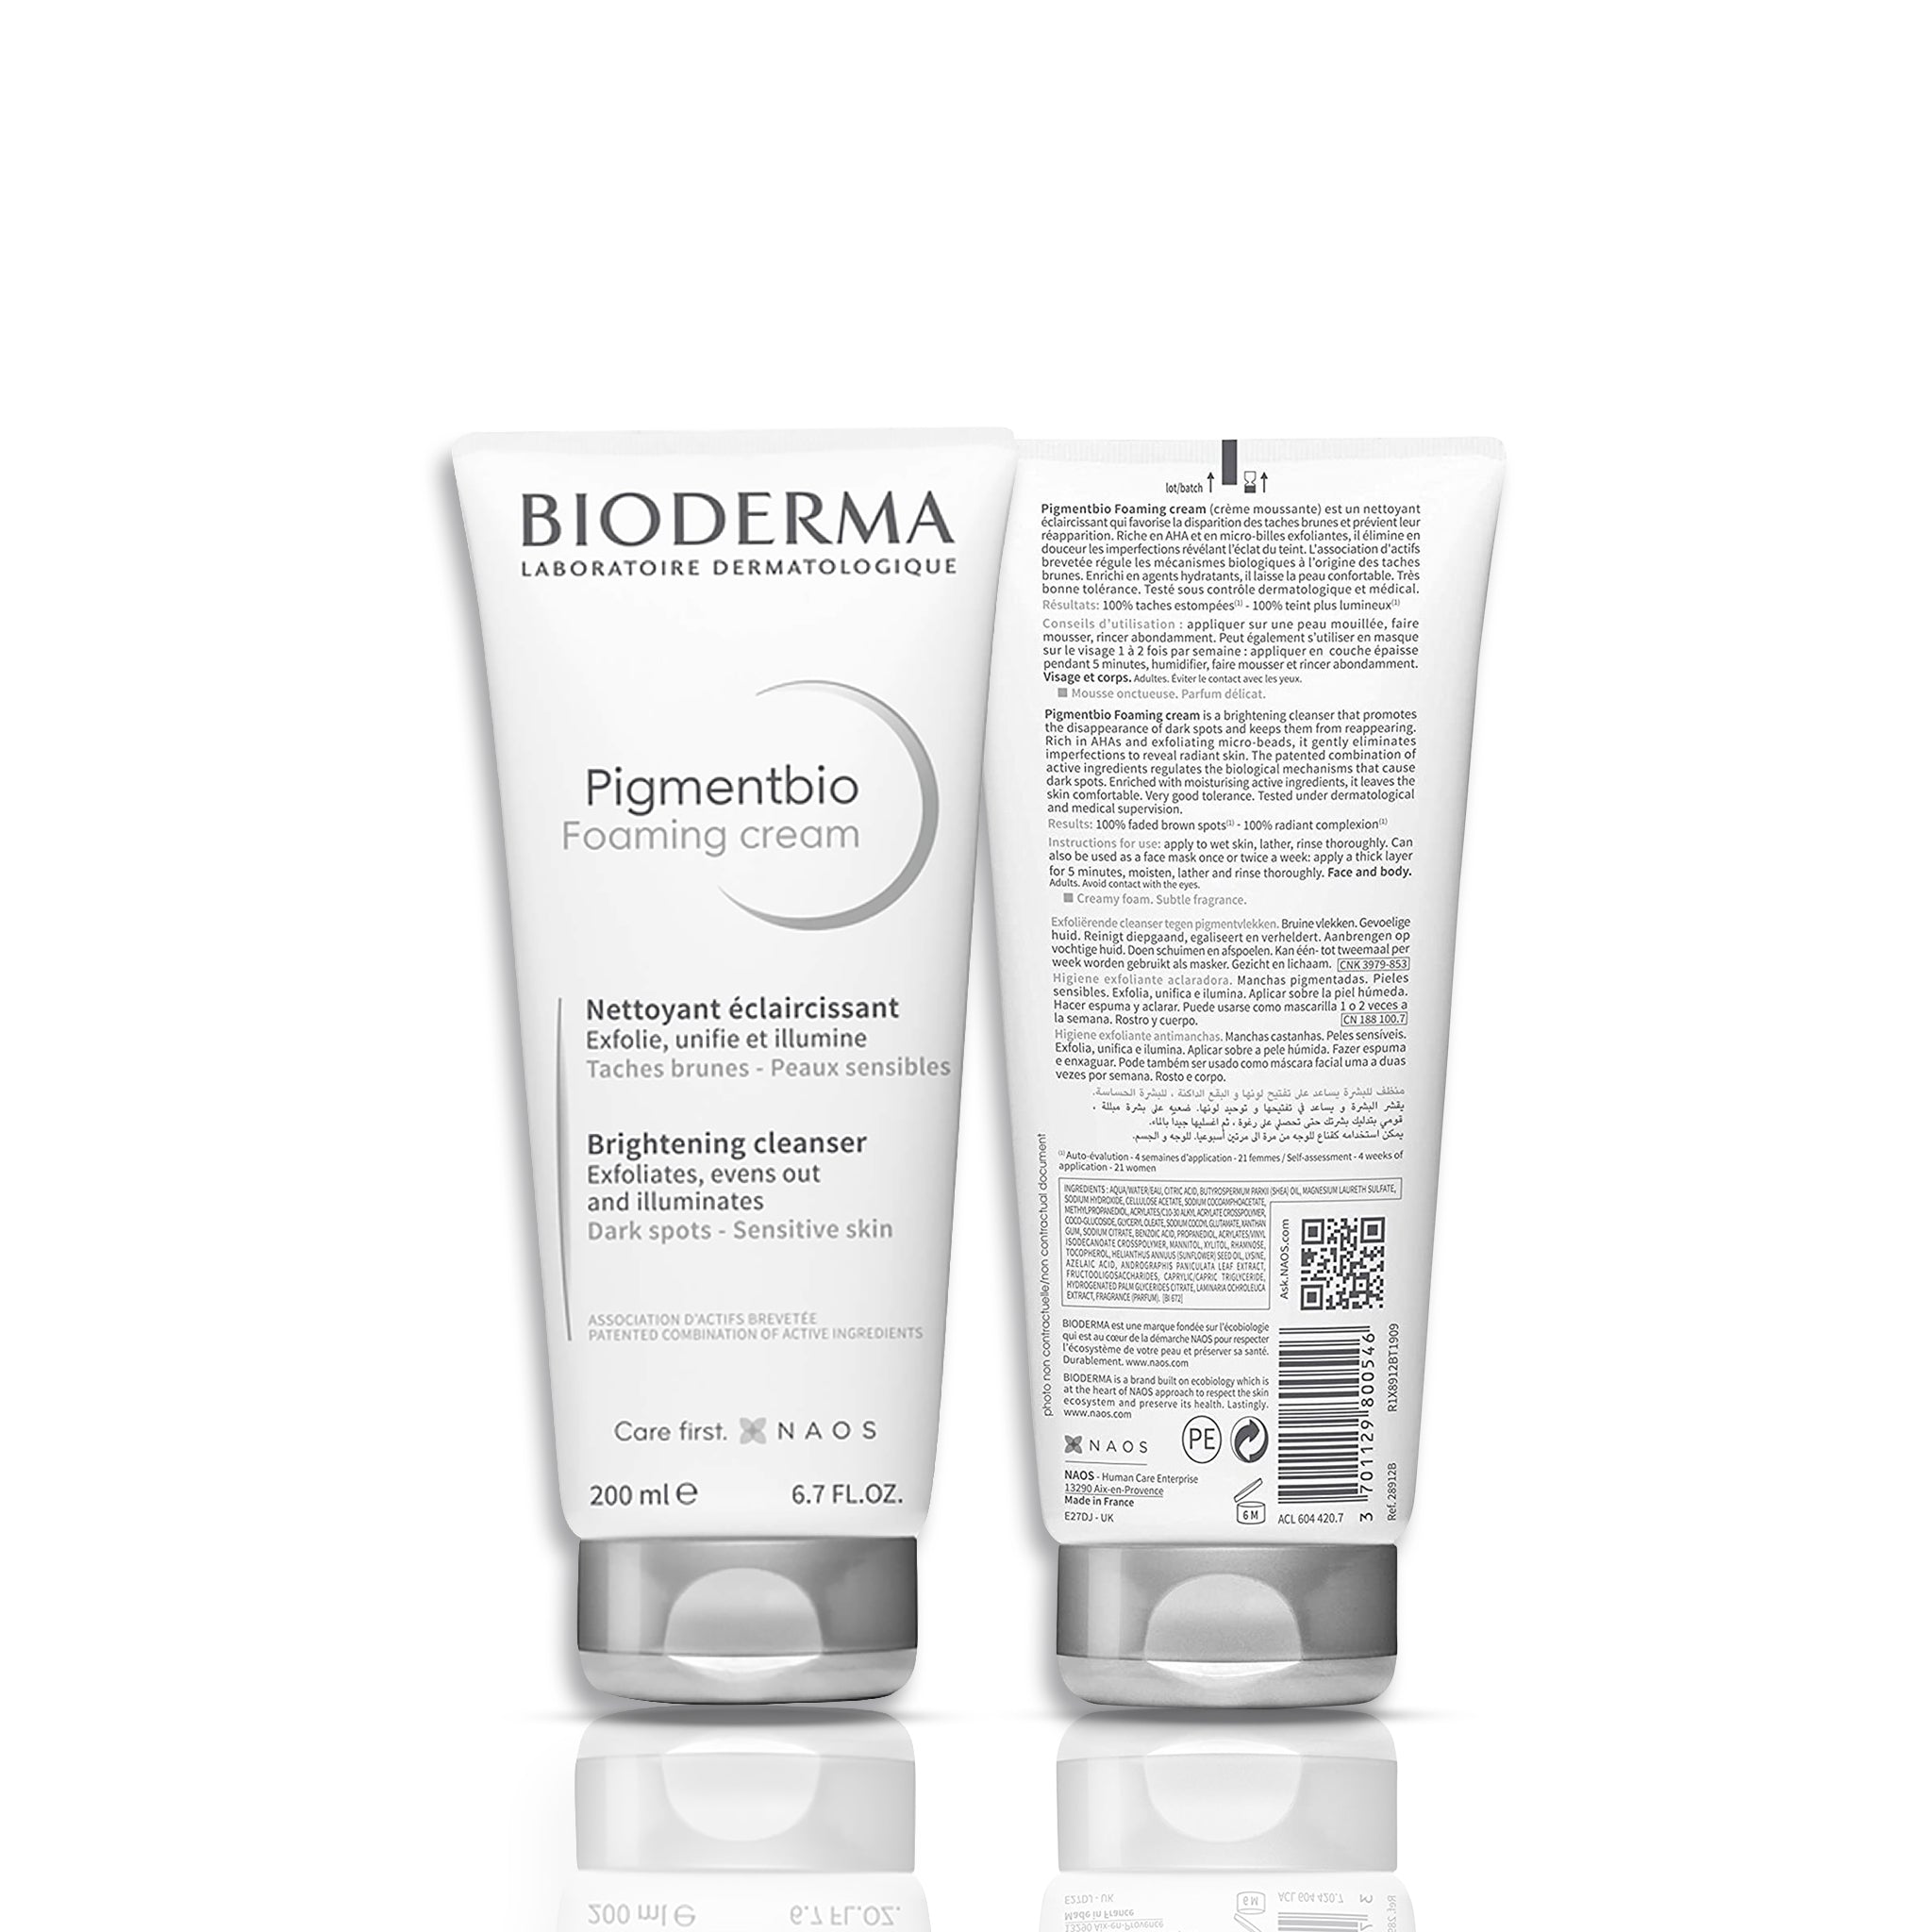 Bioderma PigmentBio Foaming cream facewash 200 ml